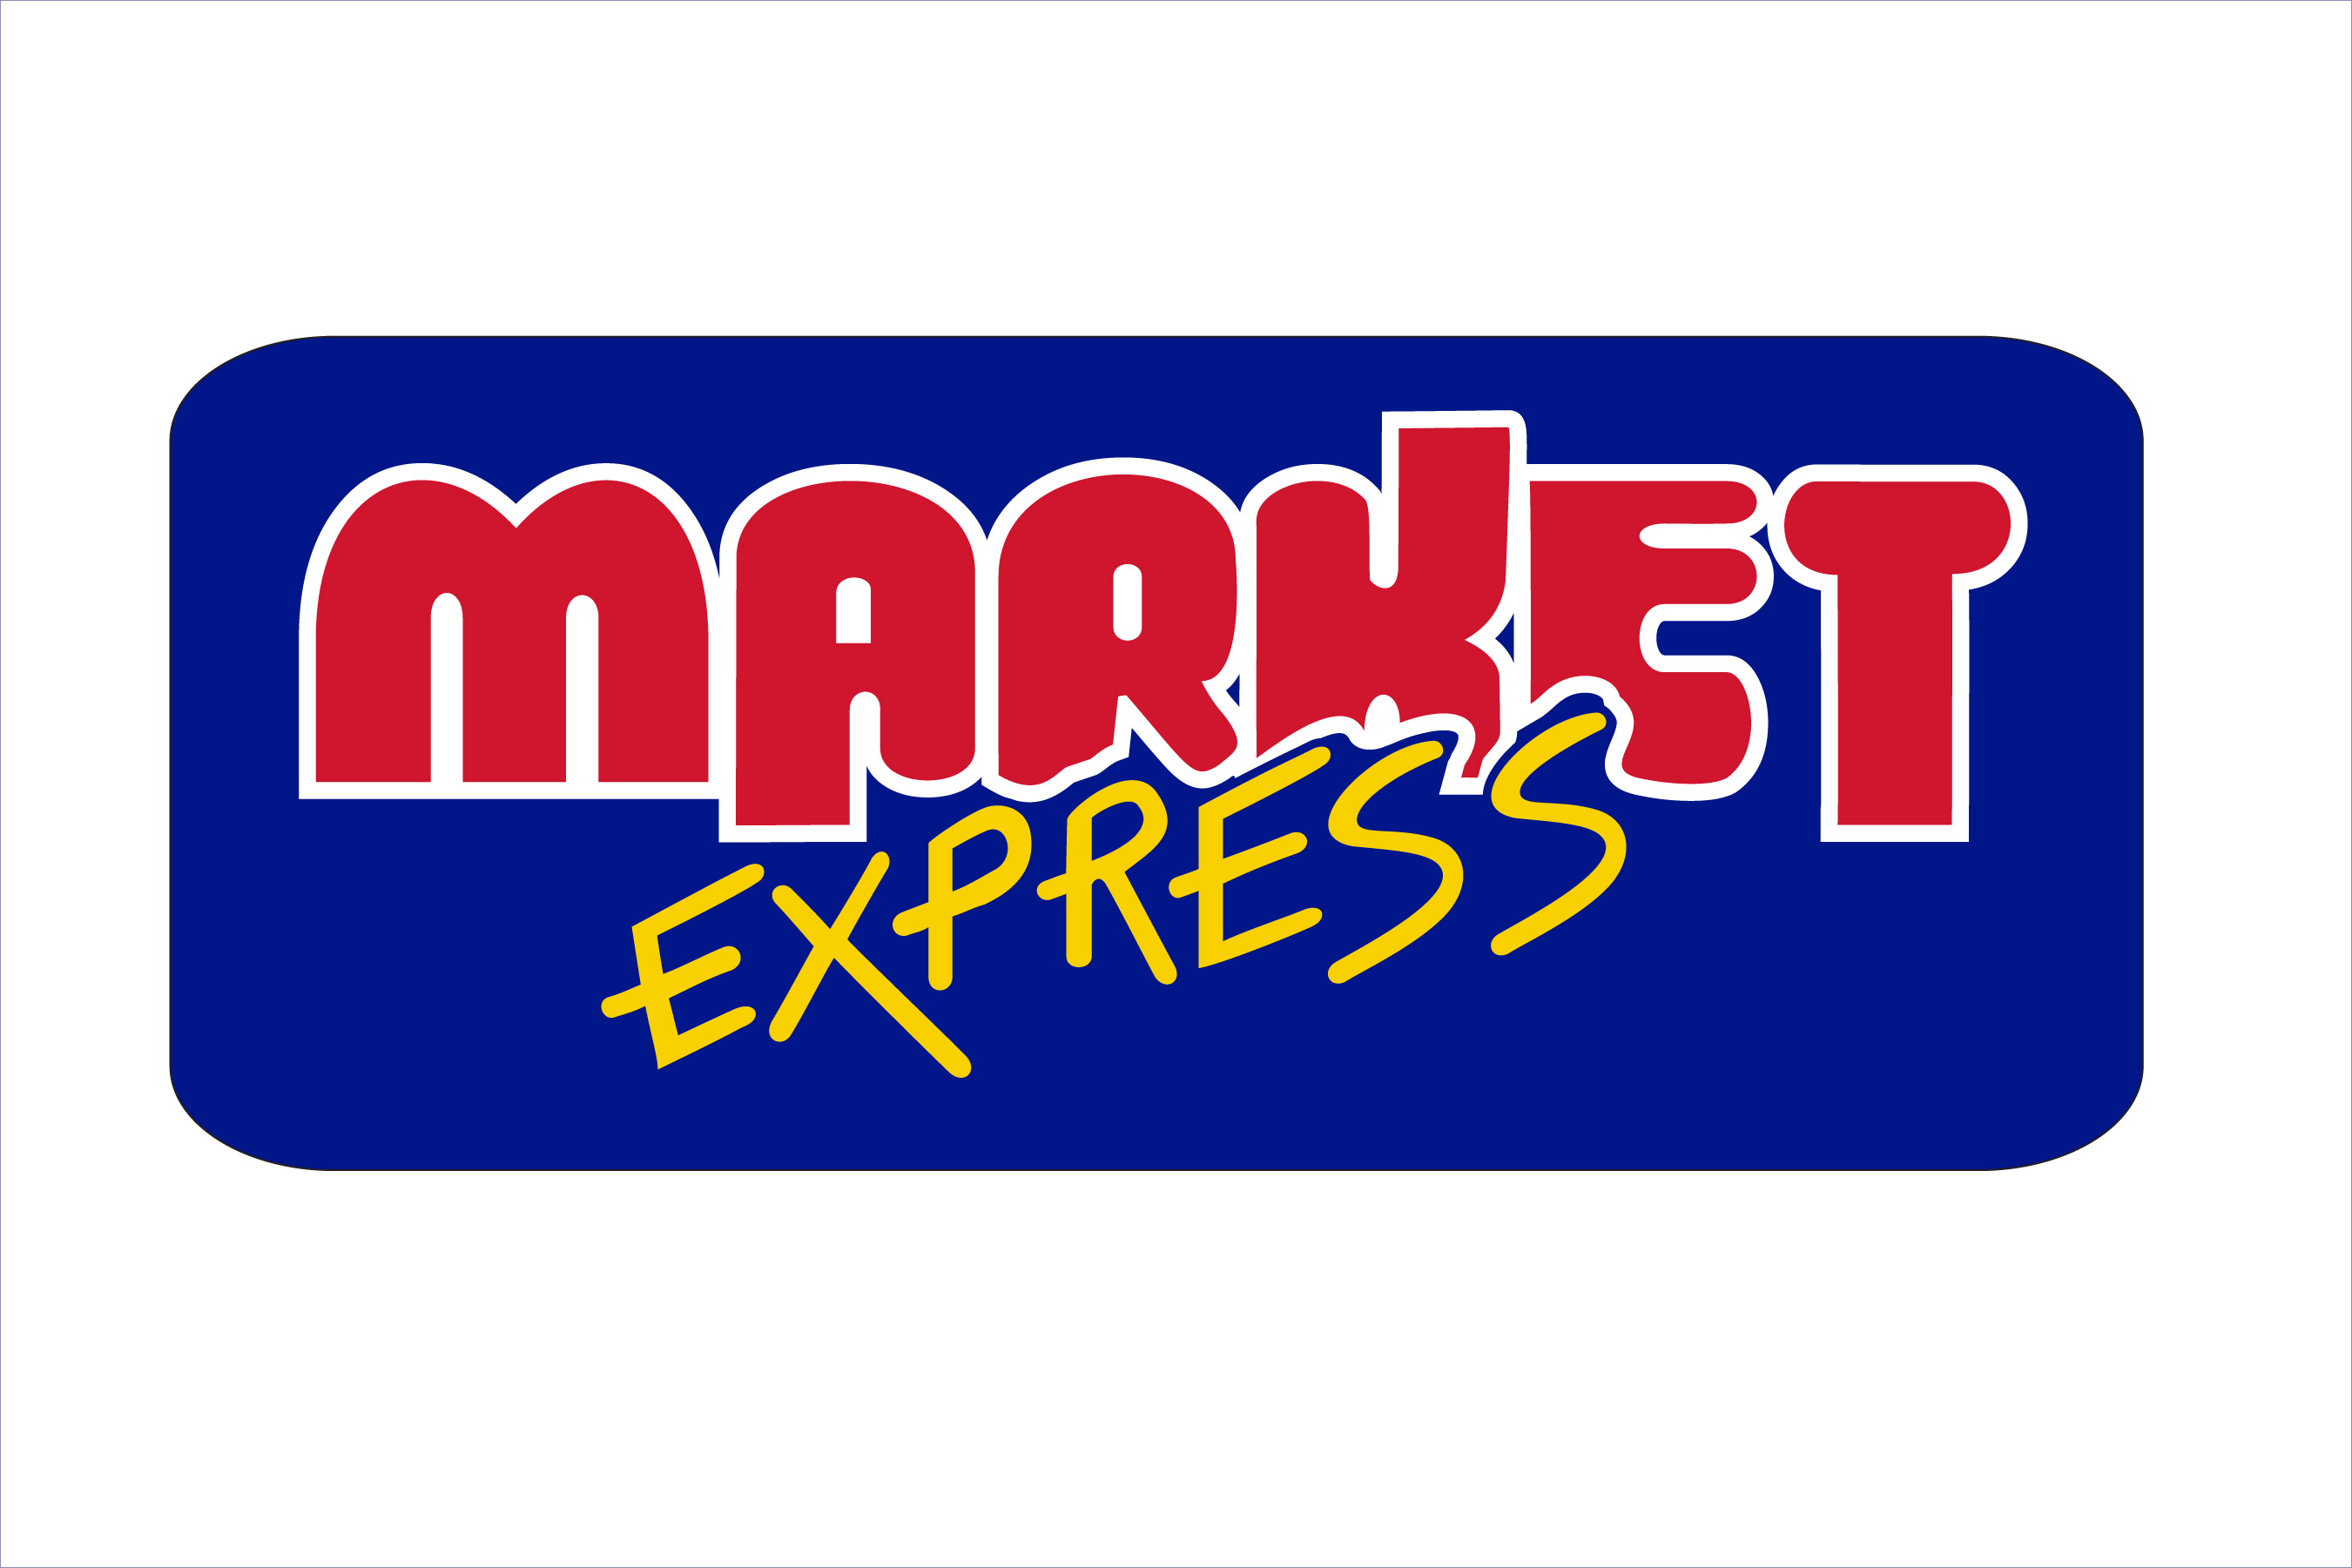 MARKET EXPRESS - WASH CARD